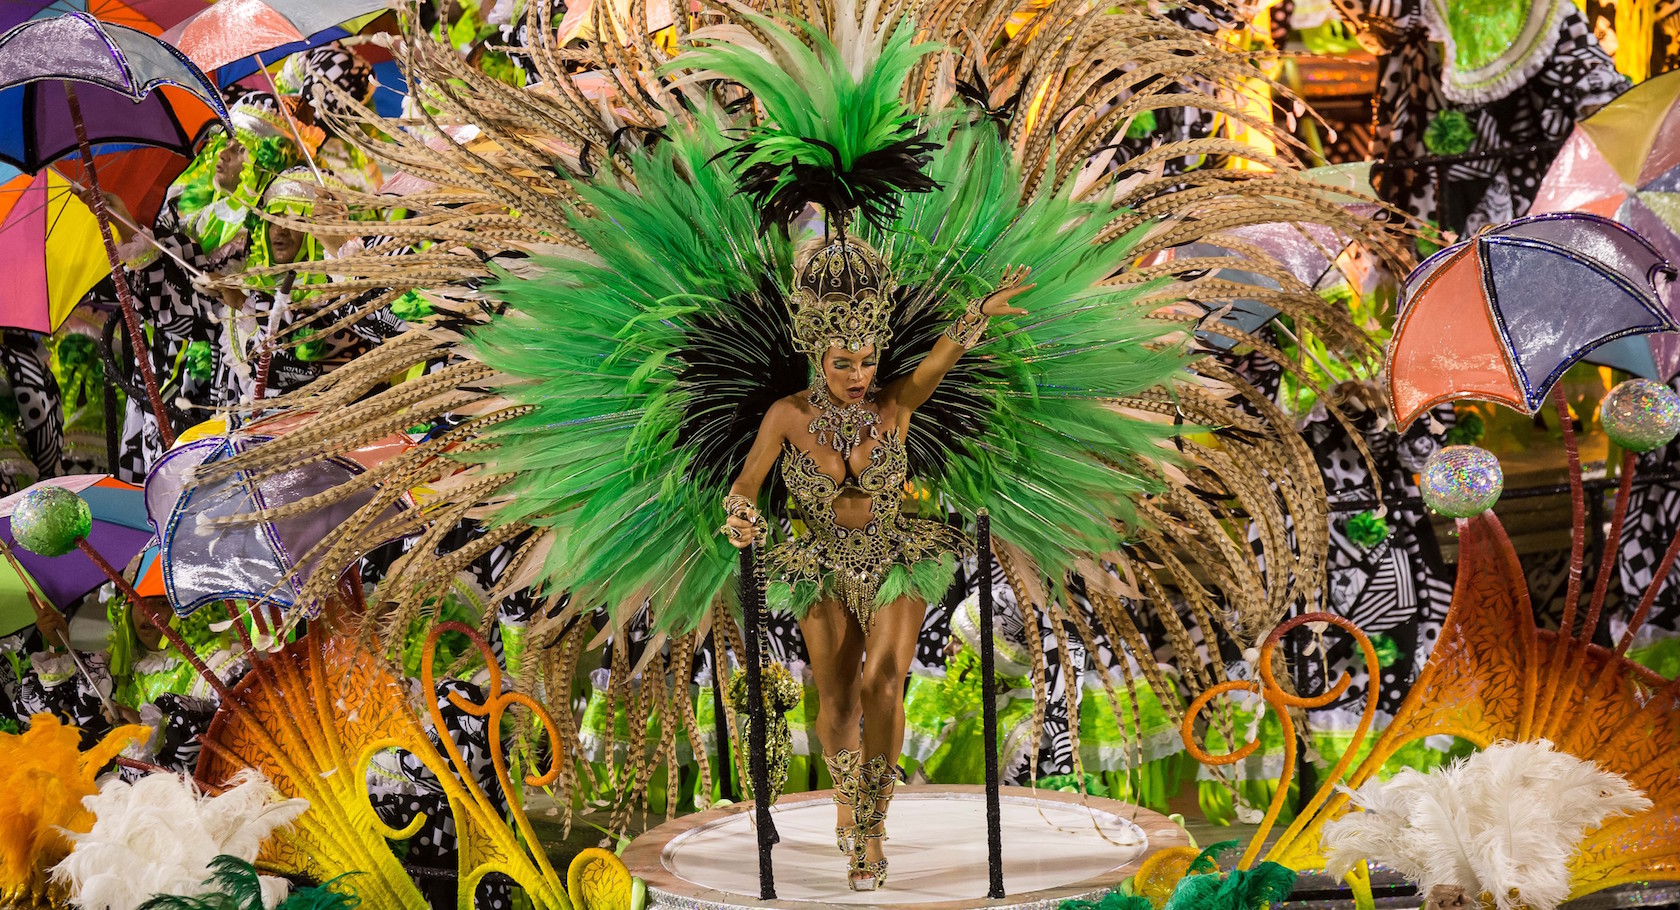 brazilian carnival